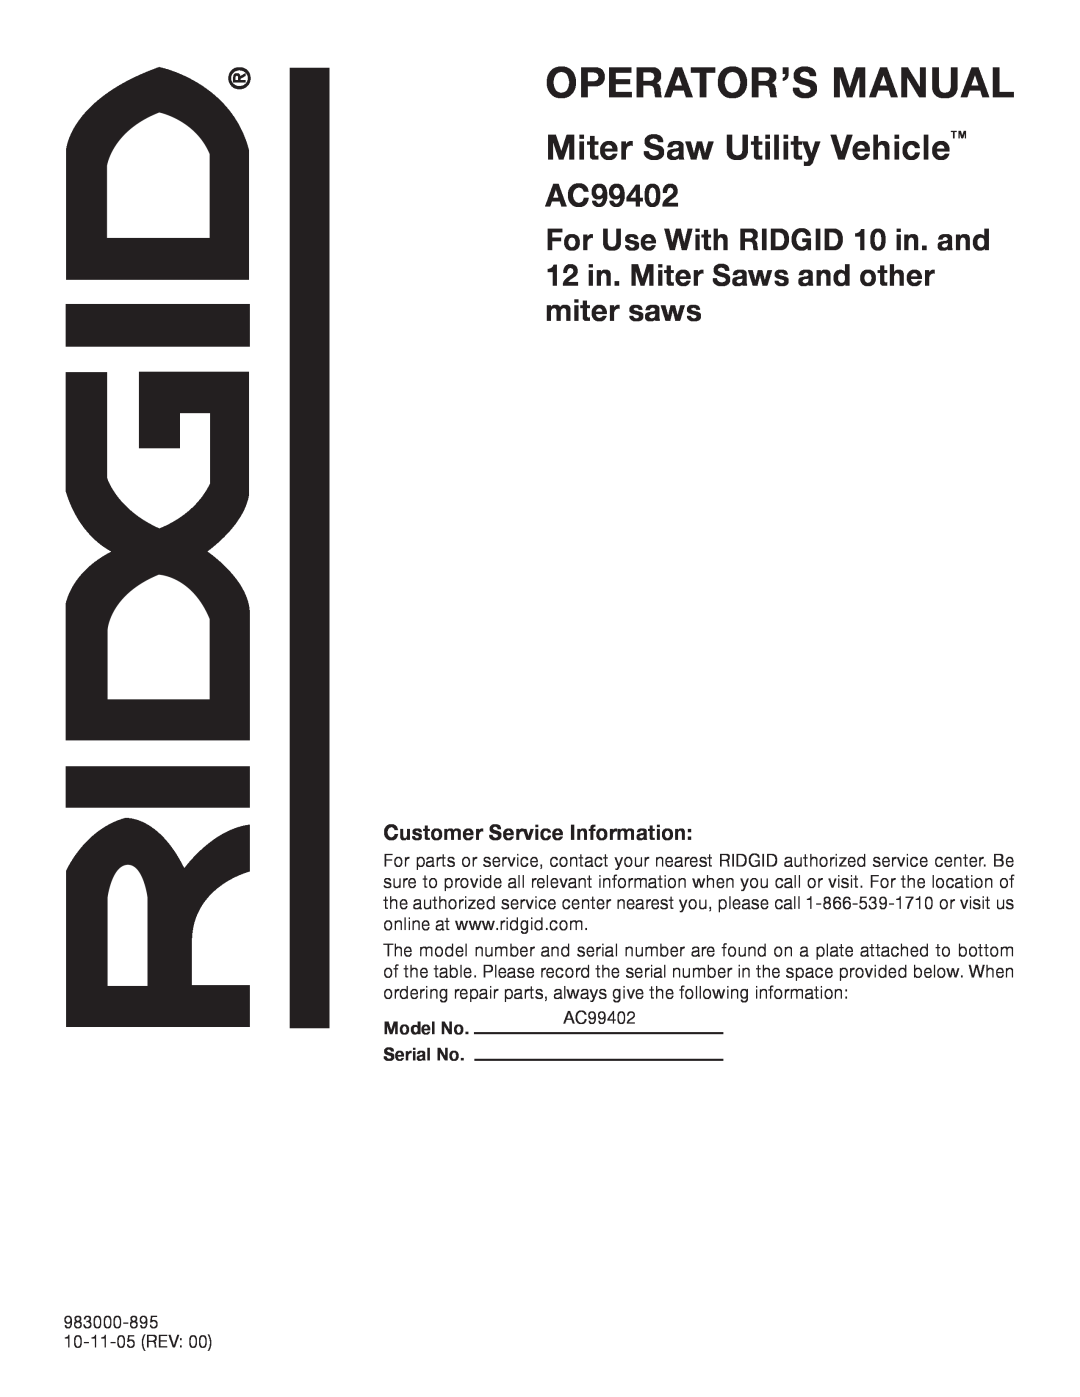 RIDGID AC99402 manual Customer Service Information, Model No, Serial No, Operator’S Manual, Miter Saw Utility VehicleTM 